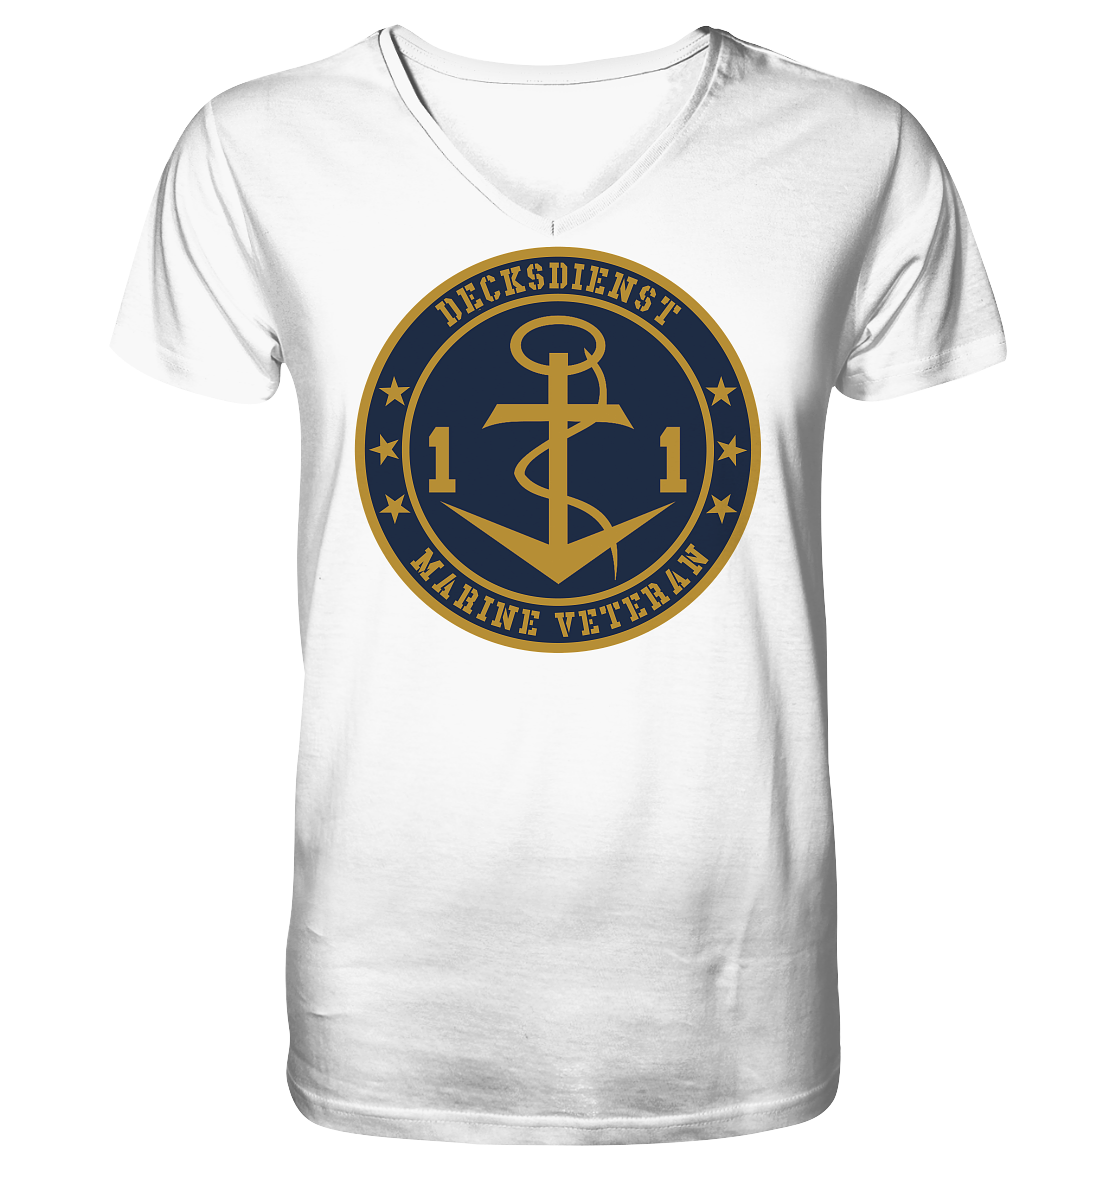 Marine Veteran 11er DECKSDIENST - Mens Organic V-Neck Shirt